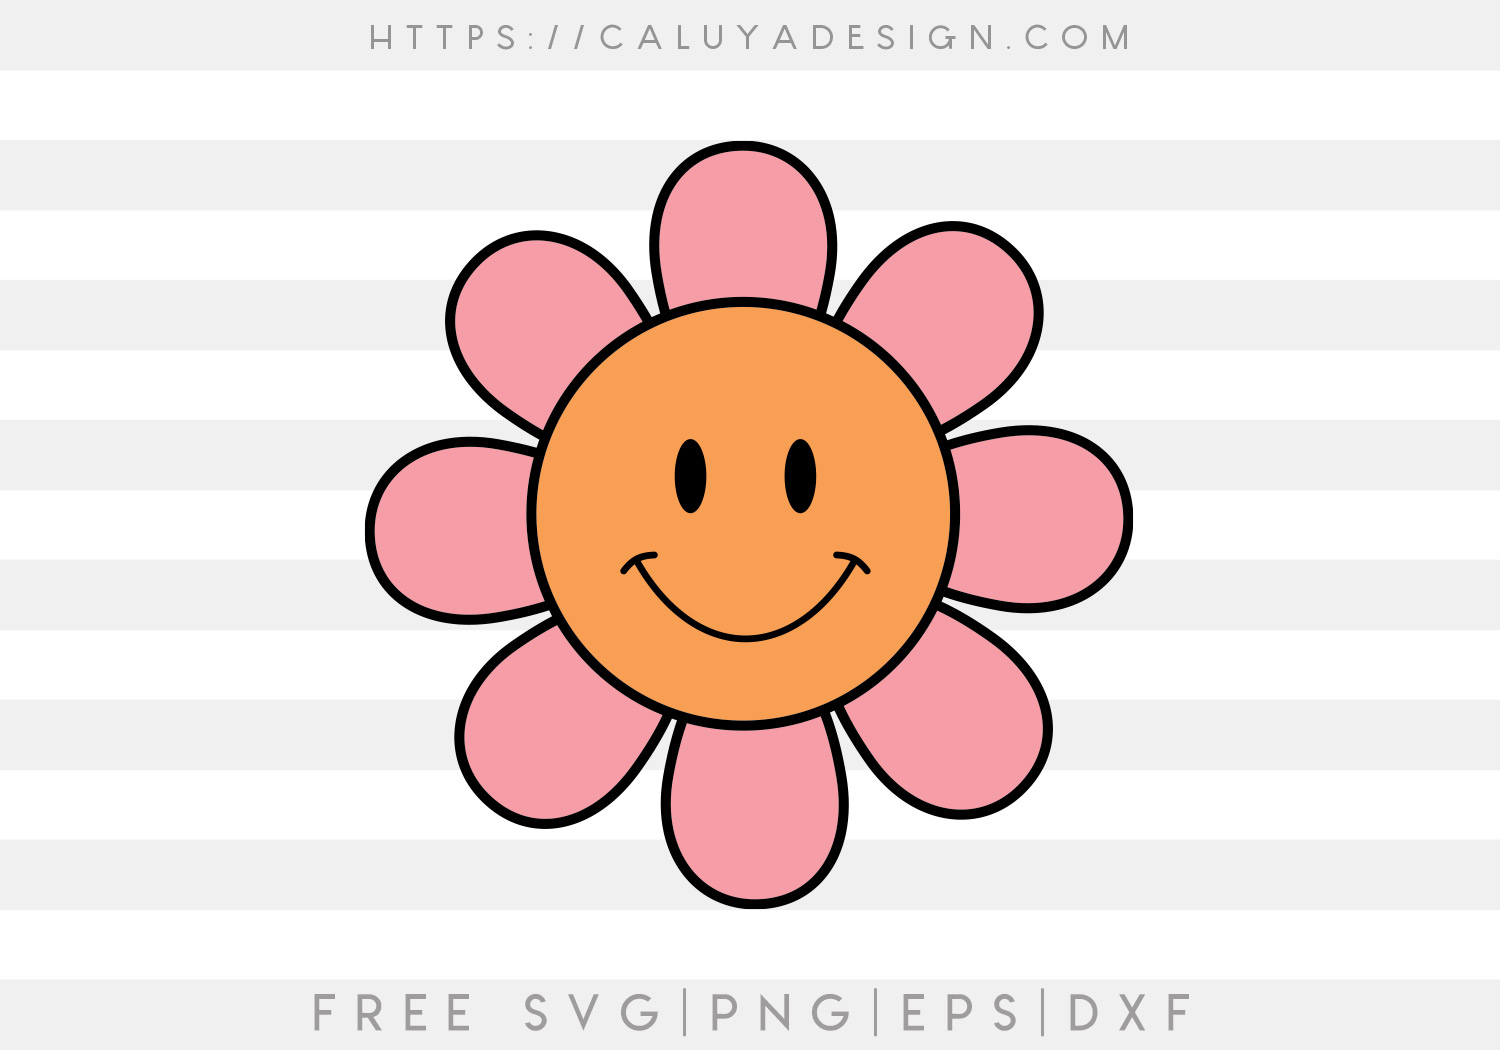 Download Free Retro Smiley Flower Svg Caluya Design